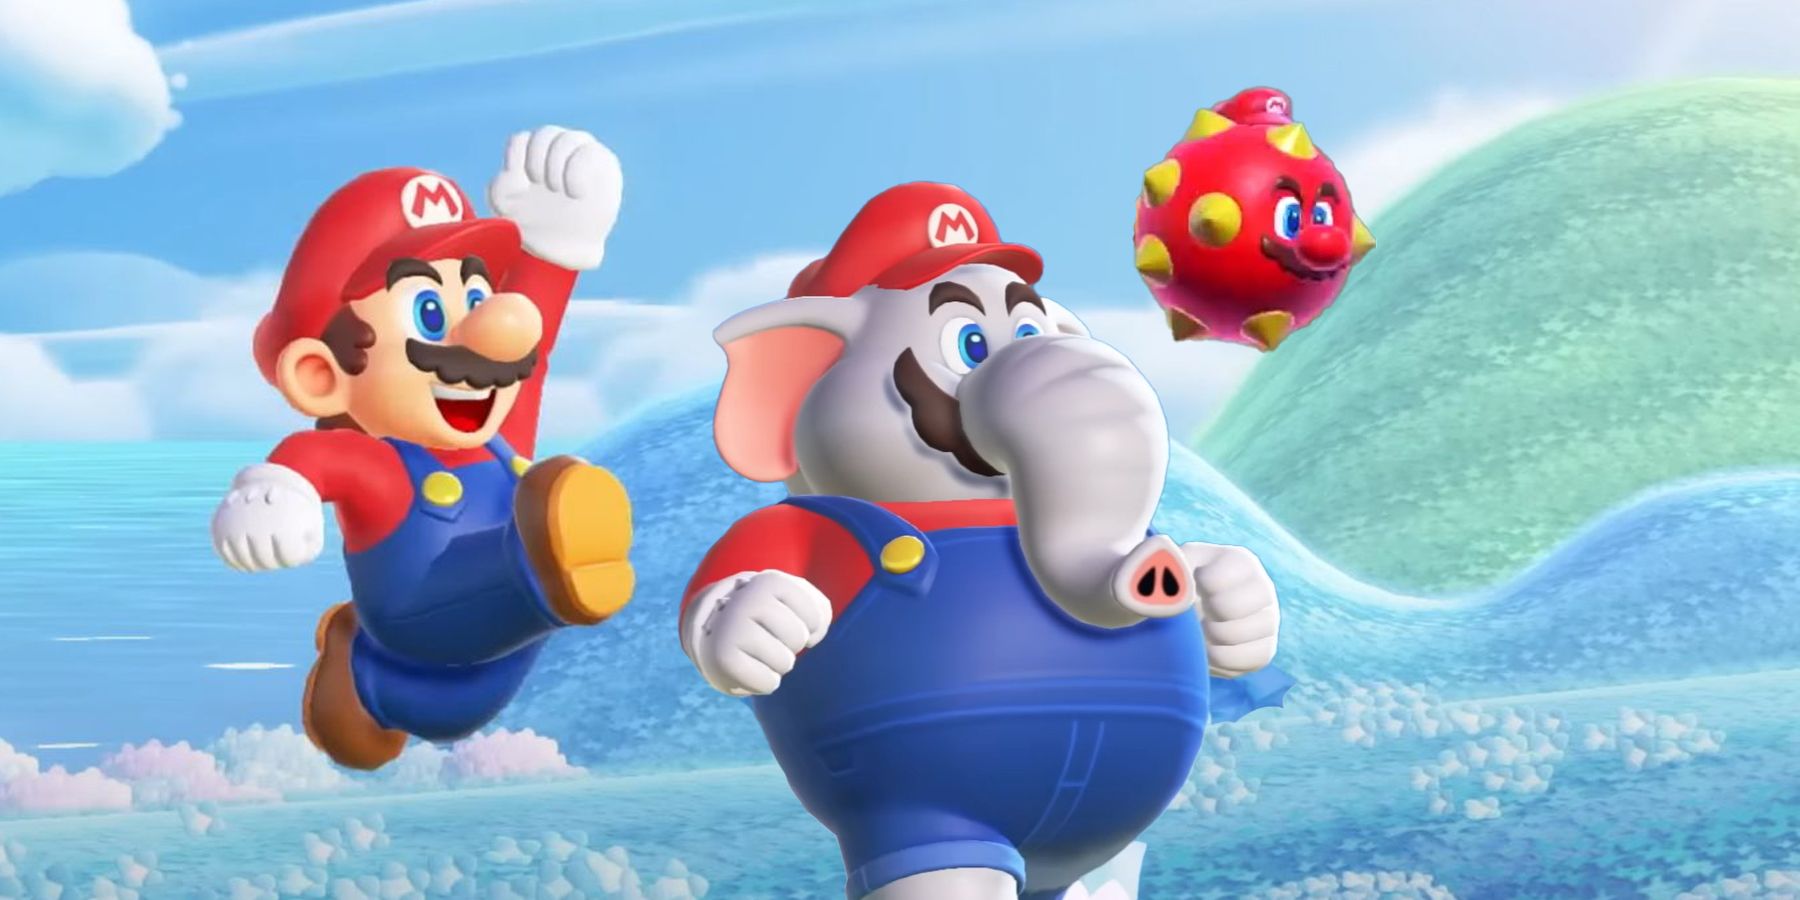 Super Mario Bros Wonder (Nintendo Switch) NEW